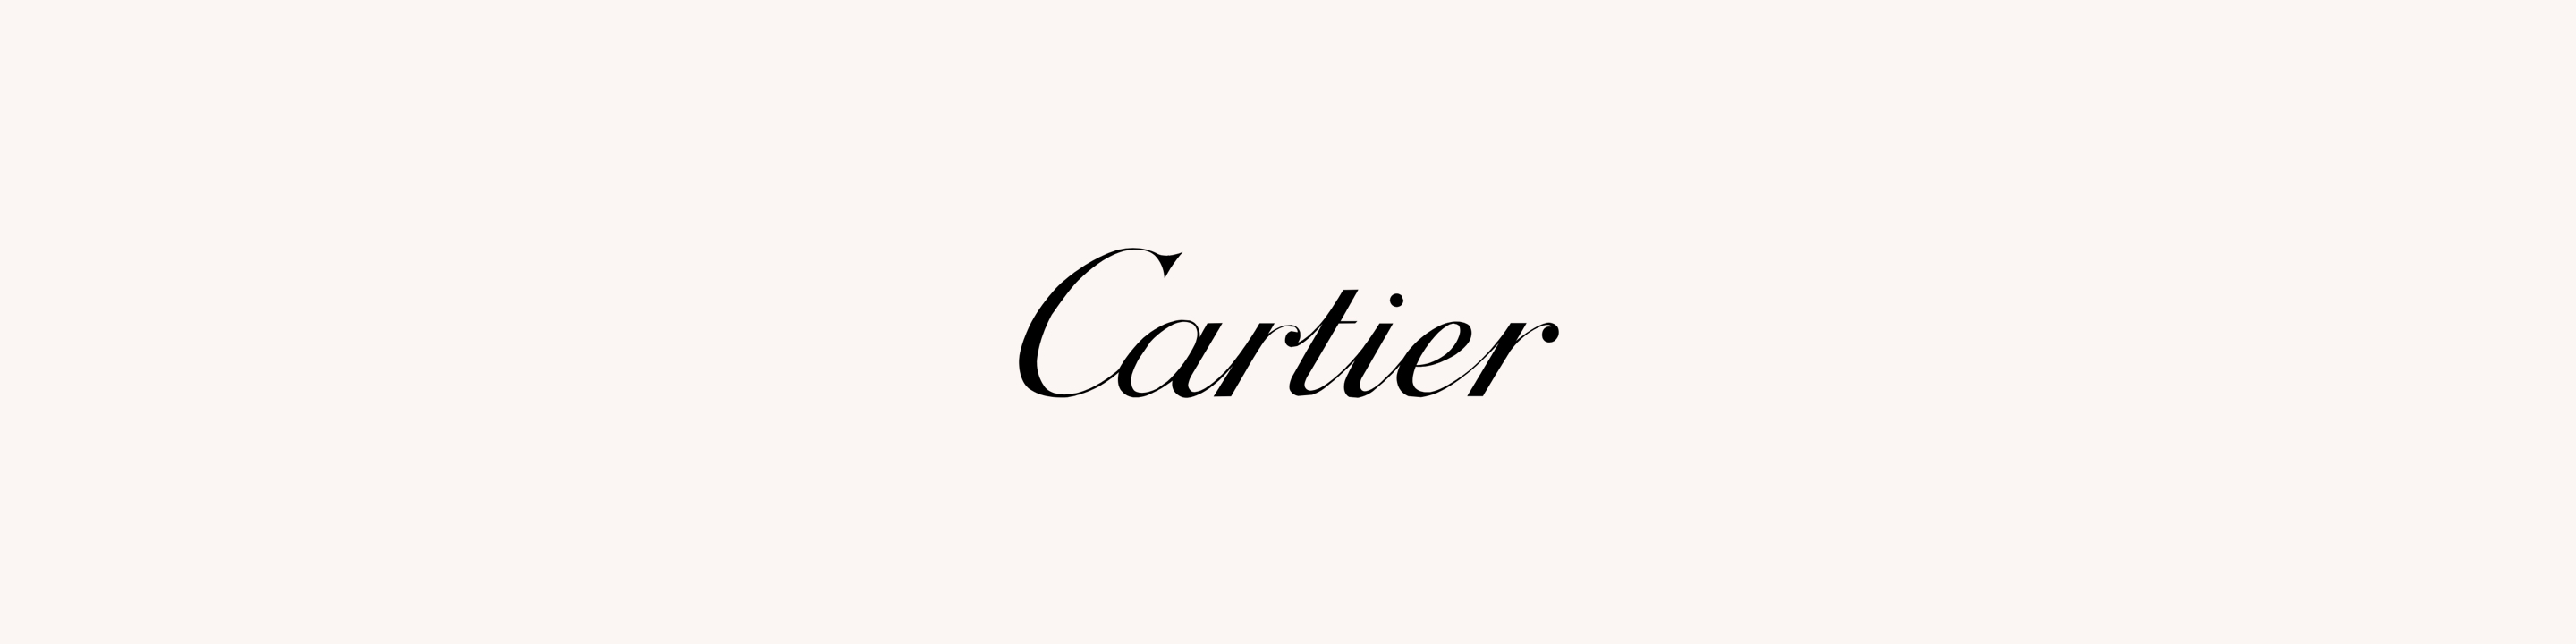 cartier eyewear logo